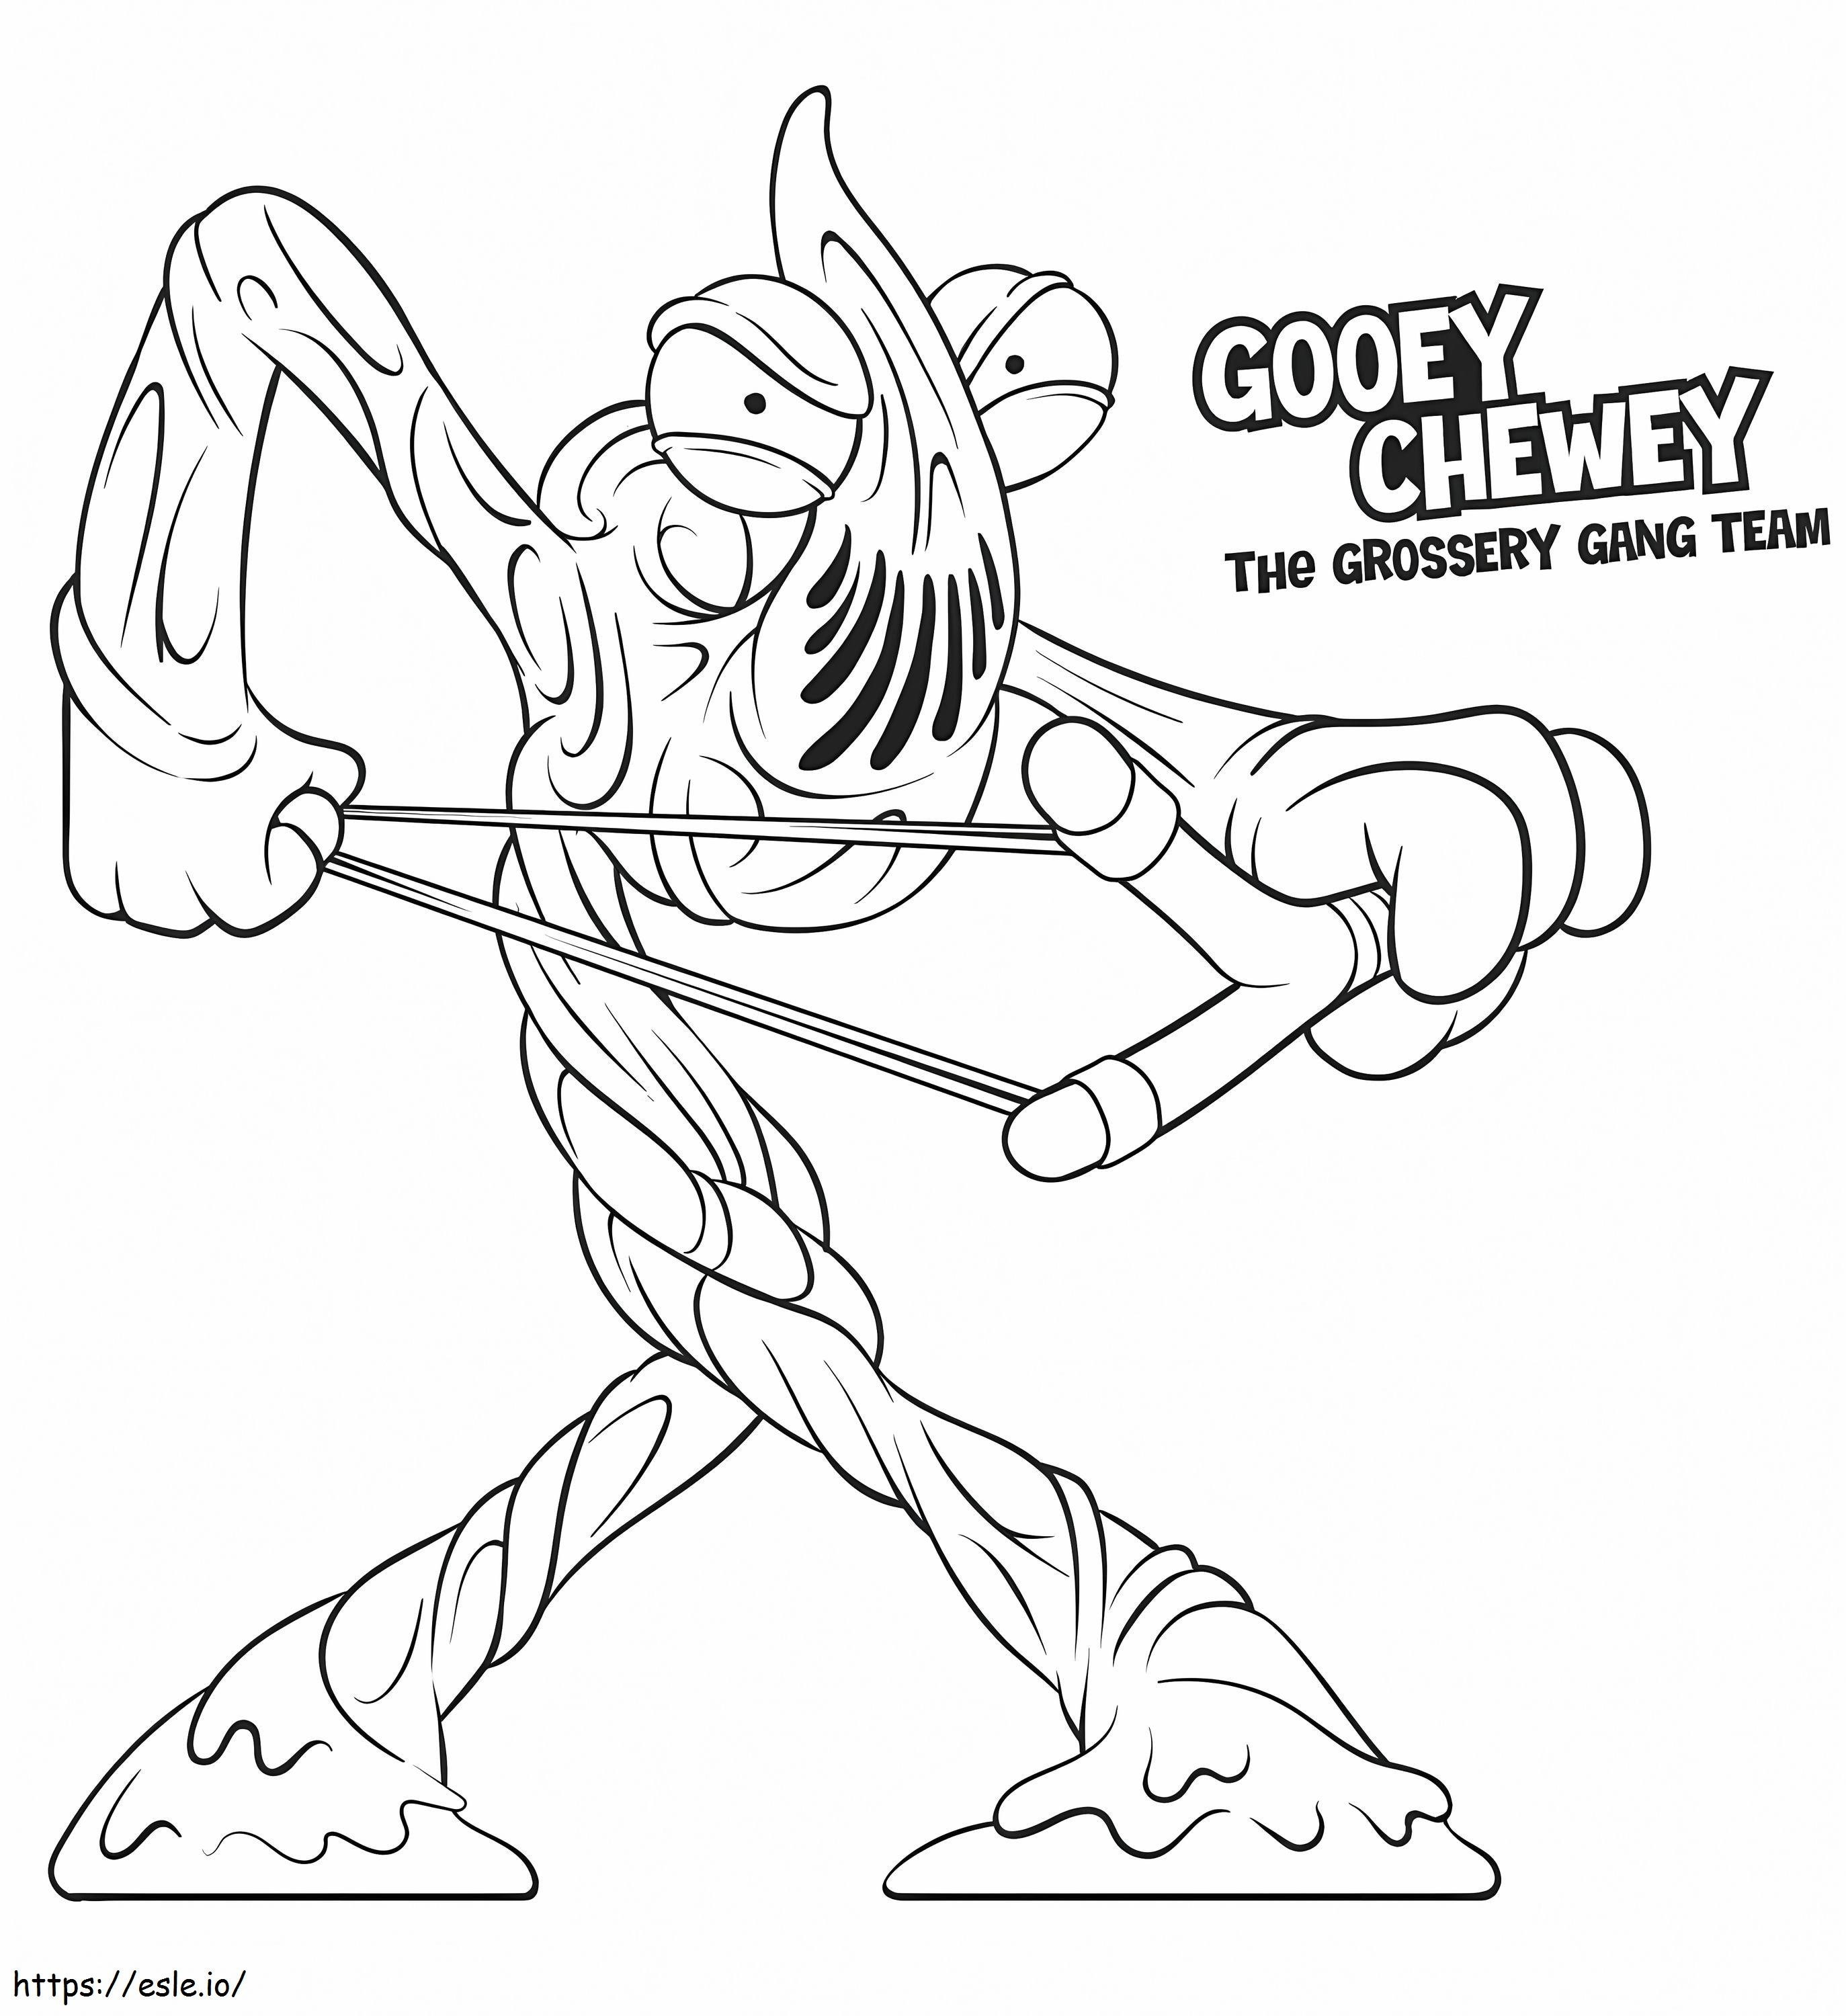 Gooey Chewey Grossery Gang ausmalbilder